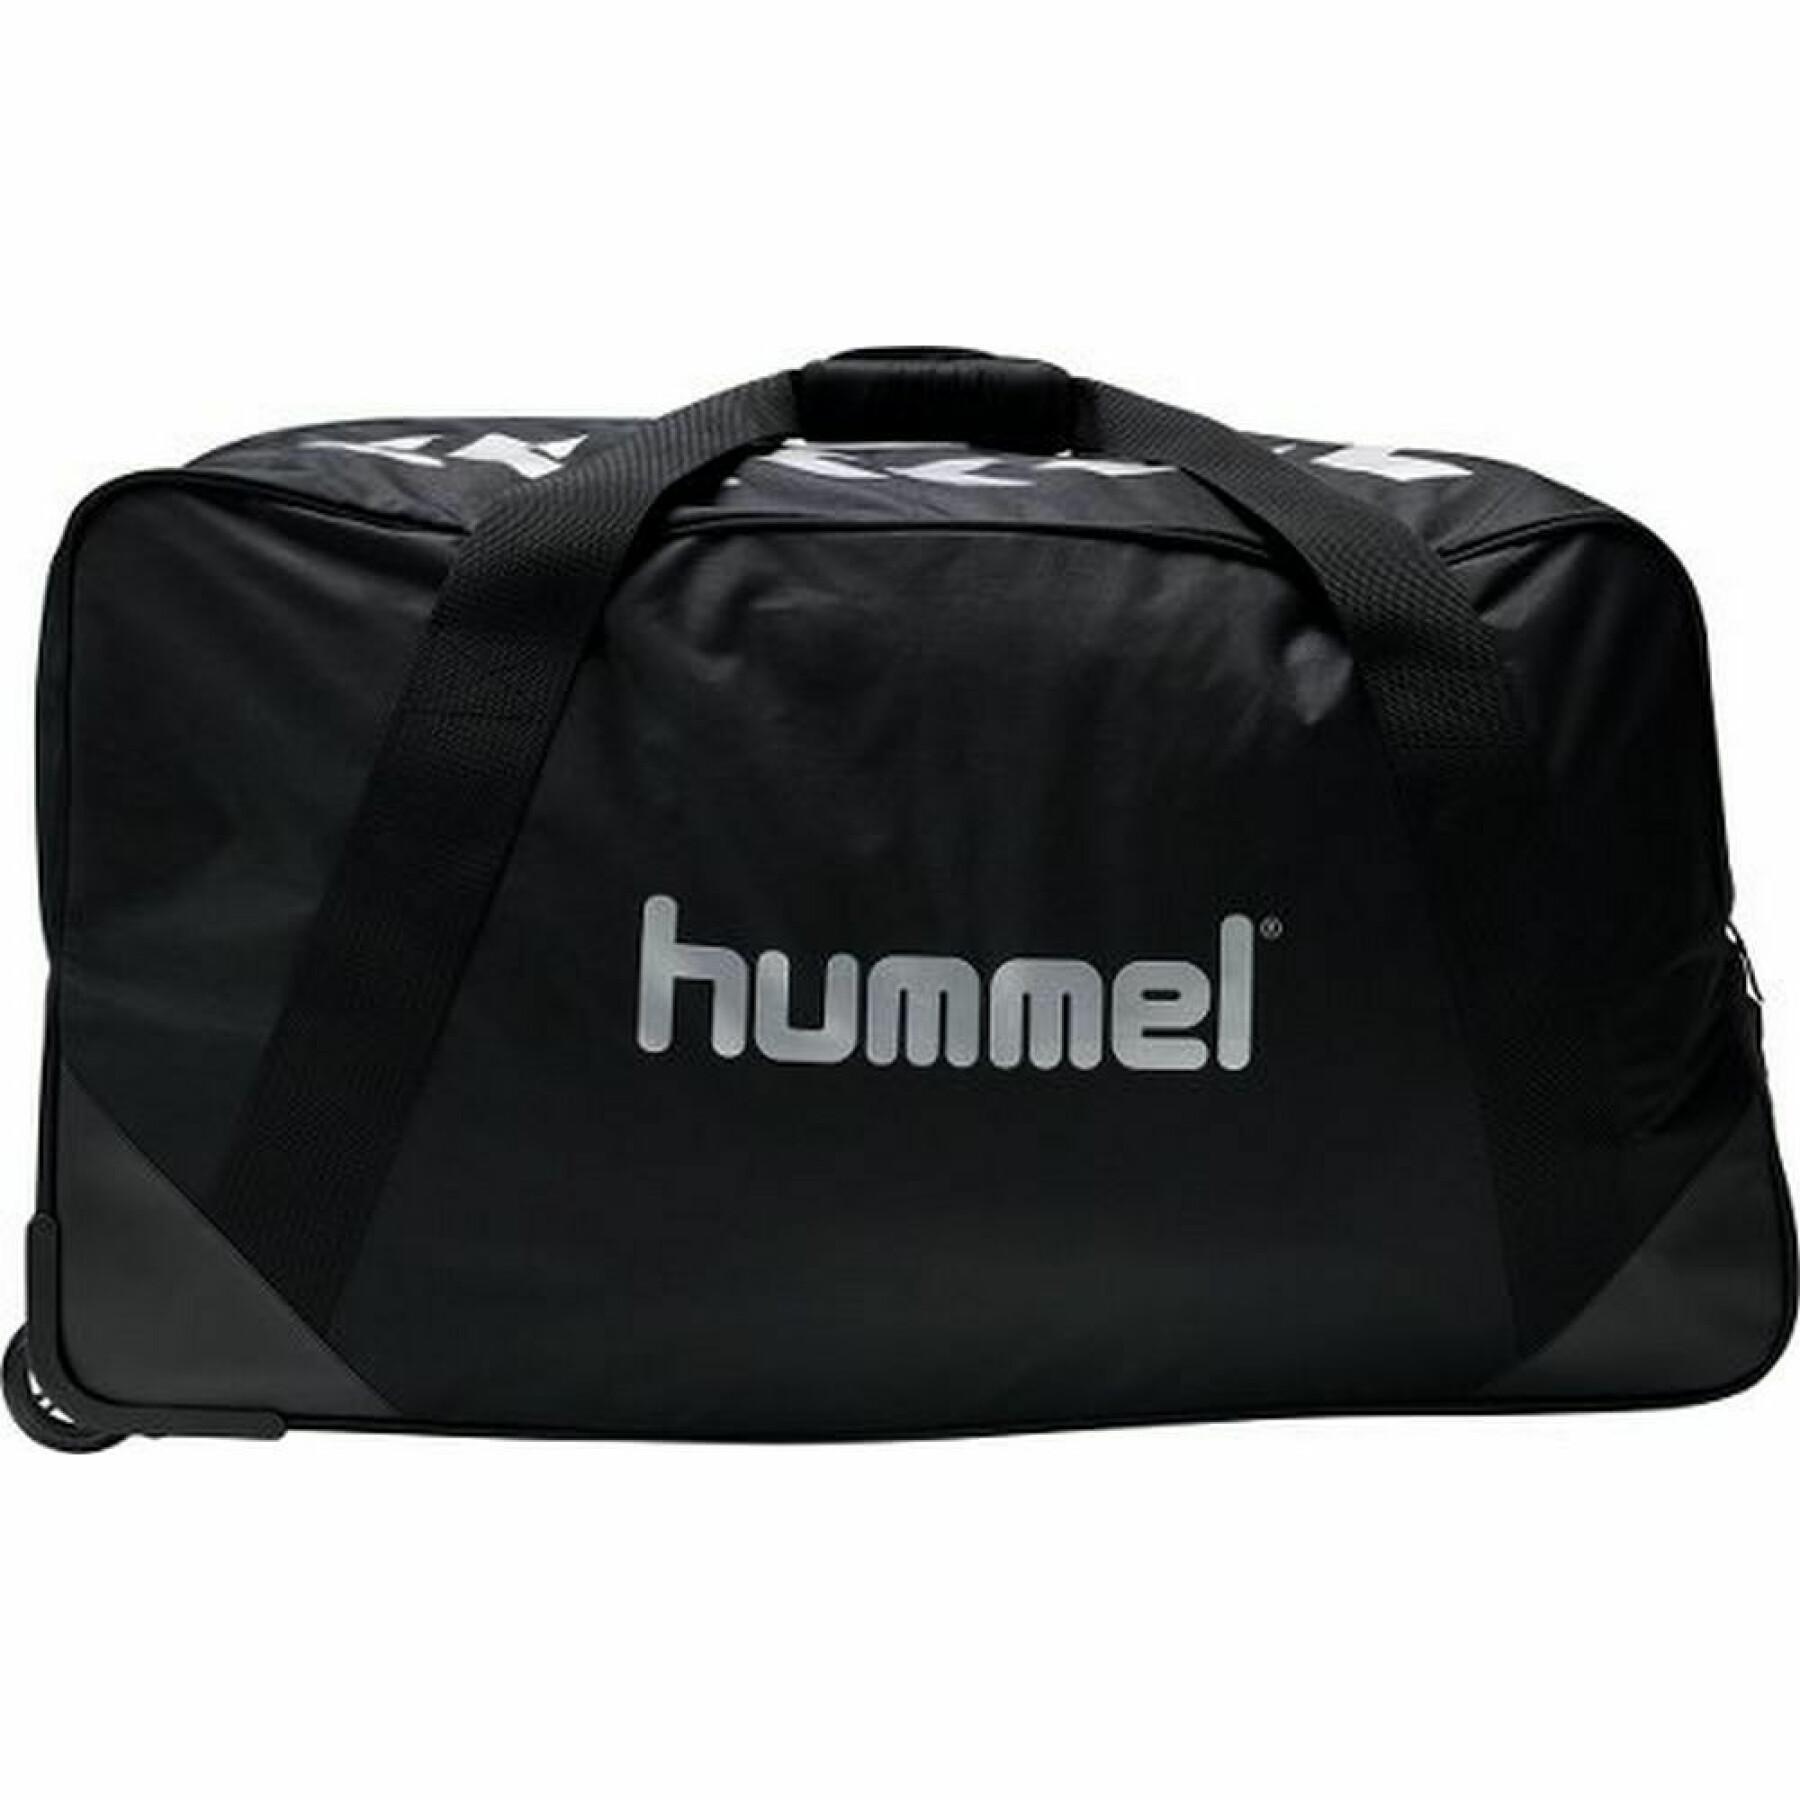 procent Lim rendering Sports bag Hummel Team Trolley - Sport bags - Bags - Equipment